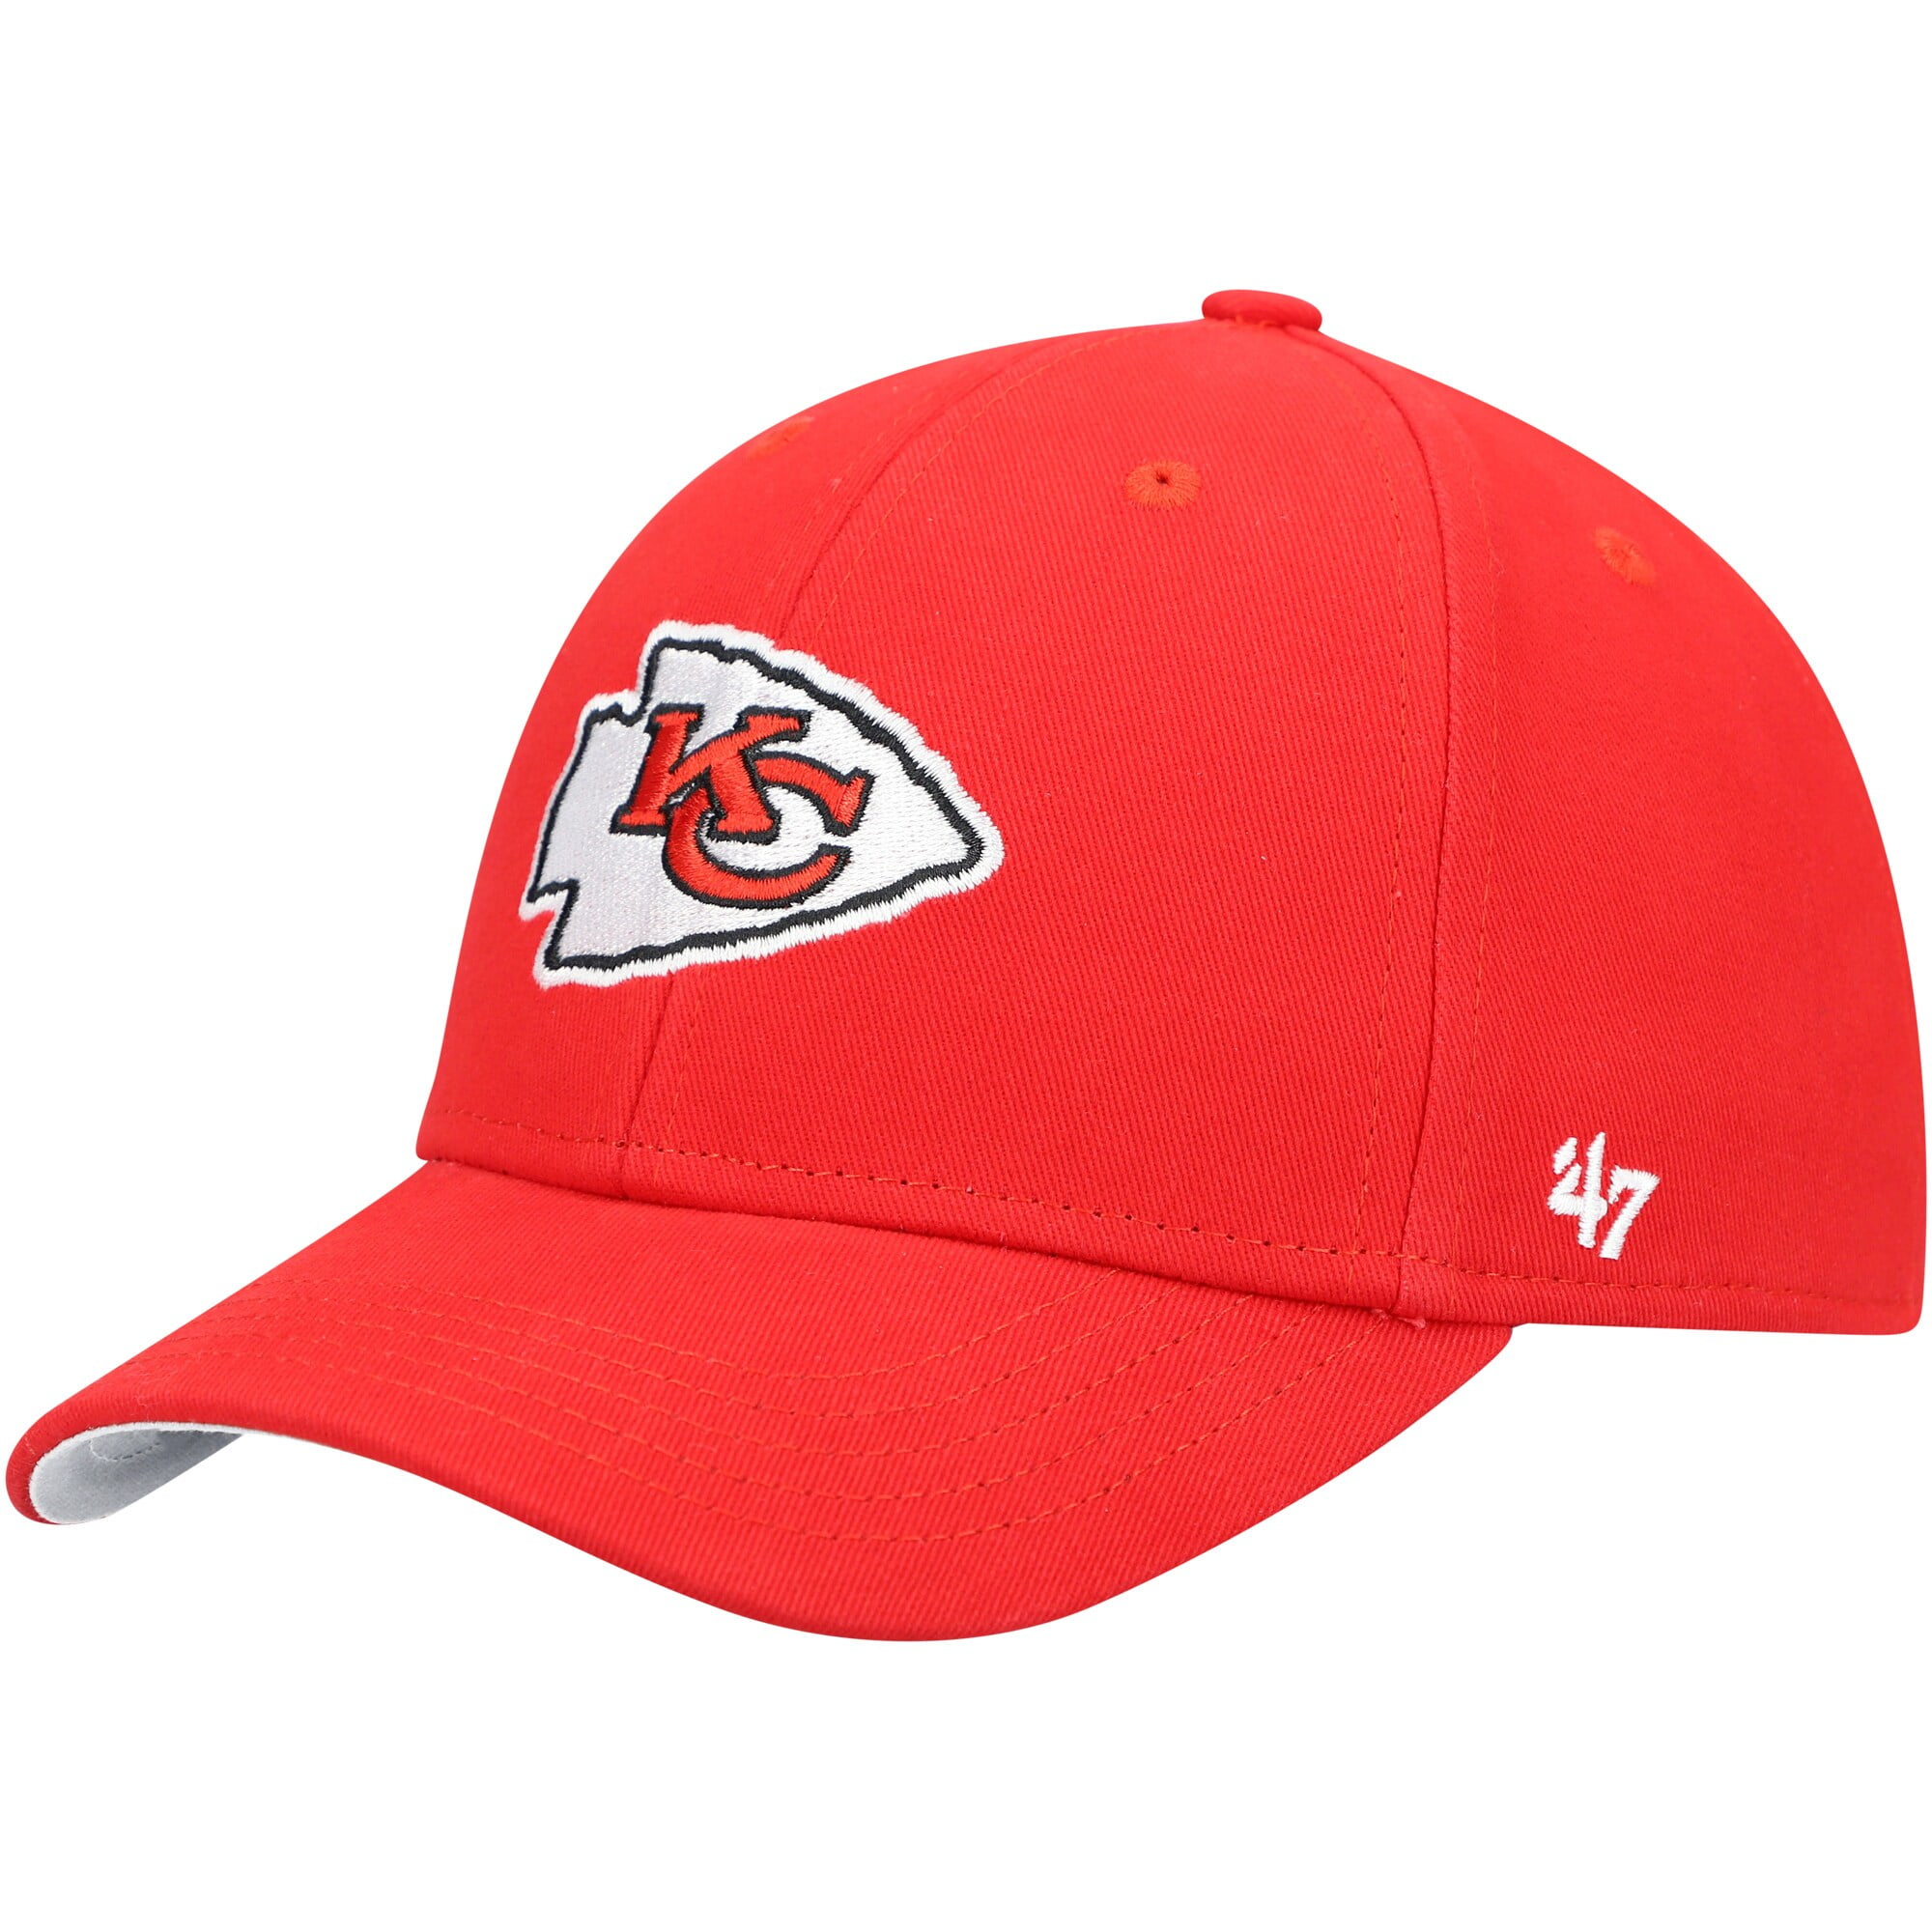 Toddler '47 Red Kansas City Chiefs Basic MVP Adjustable Hat - OSFA 